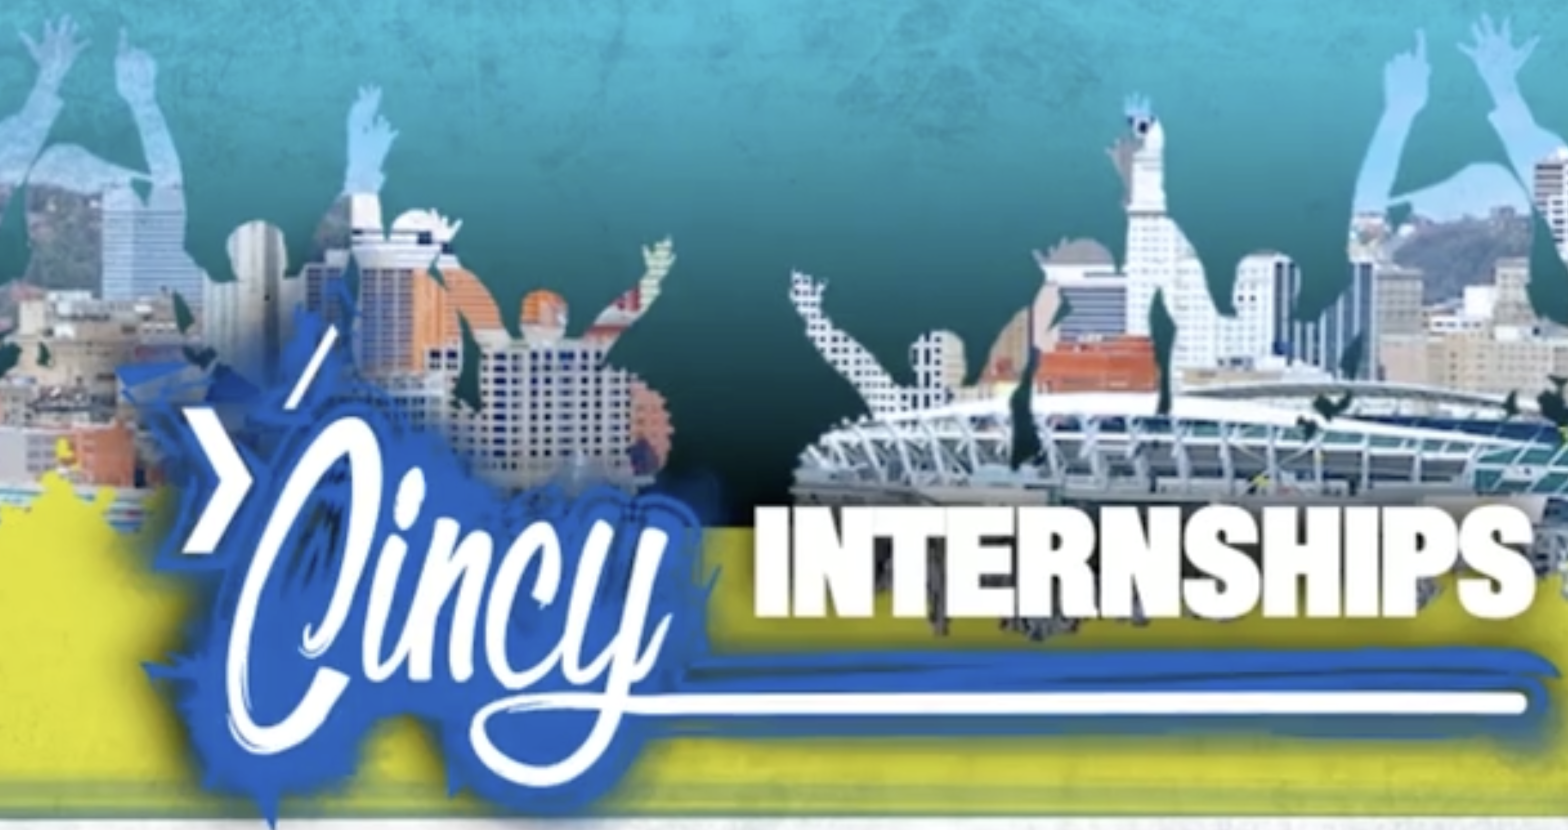 Cincy Internships